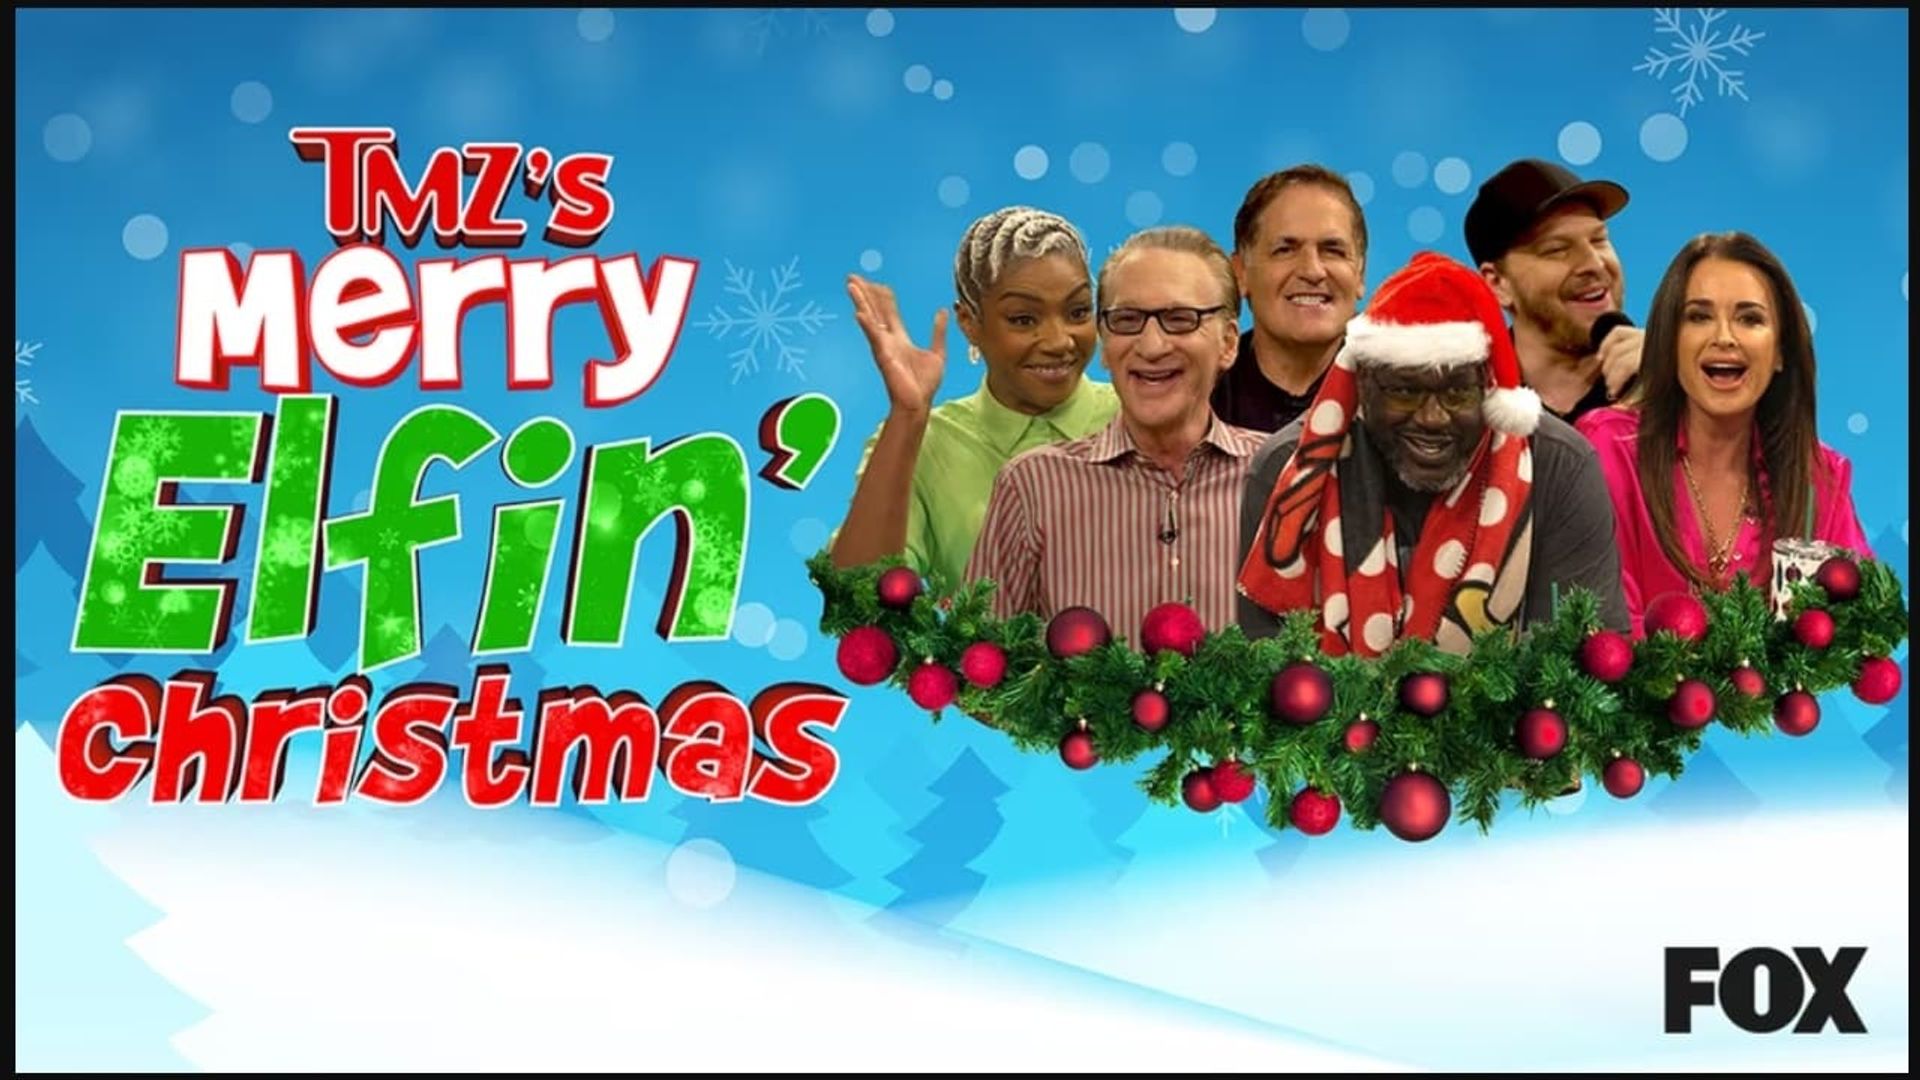 TMZ's Merry Elfin' Christmas background